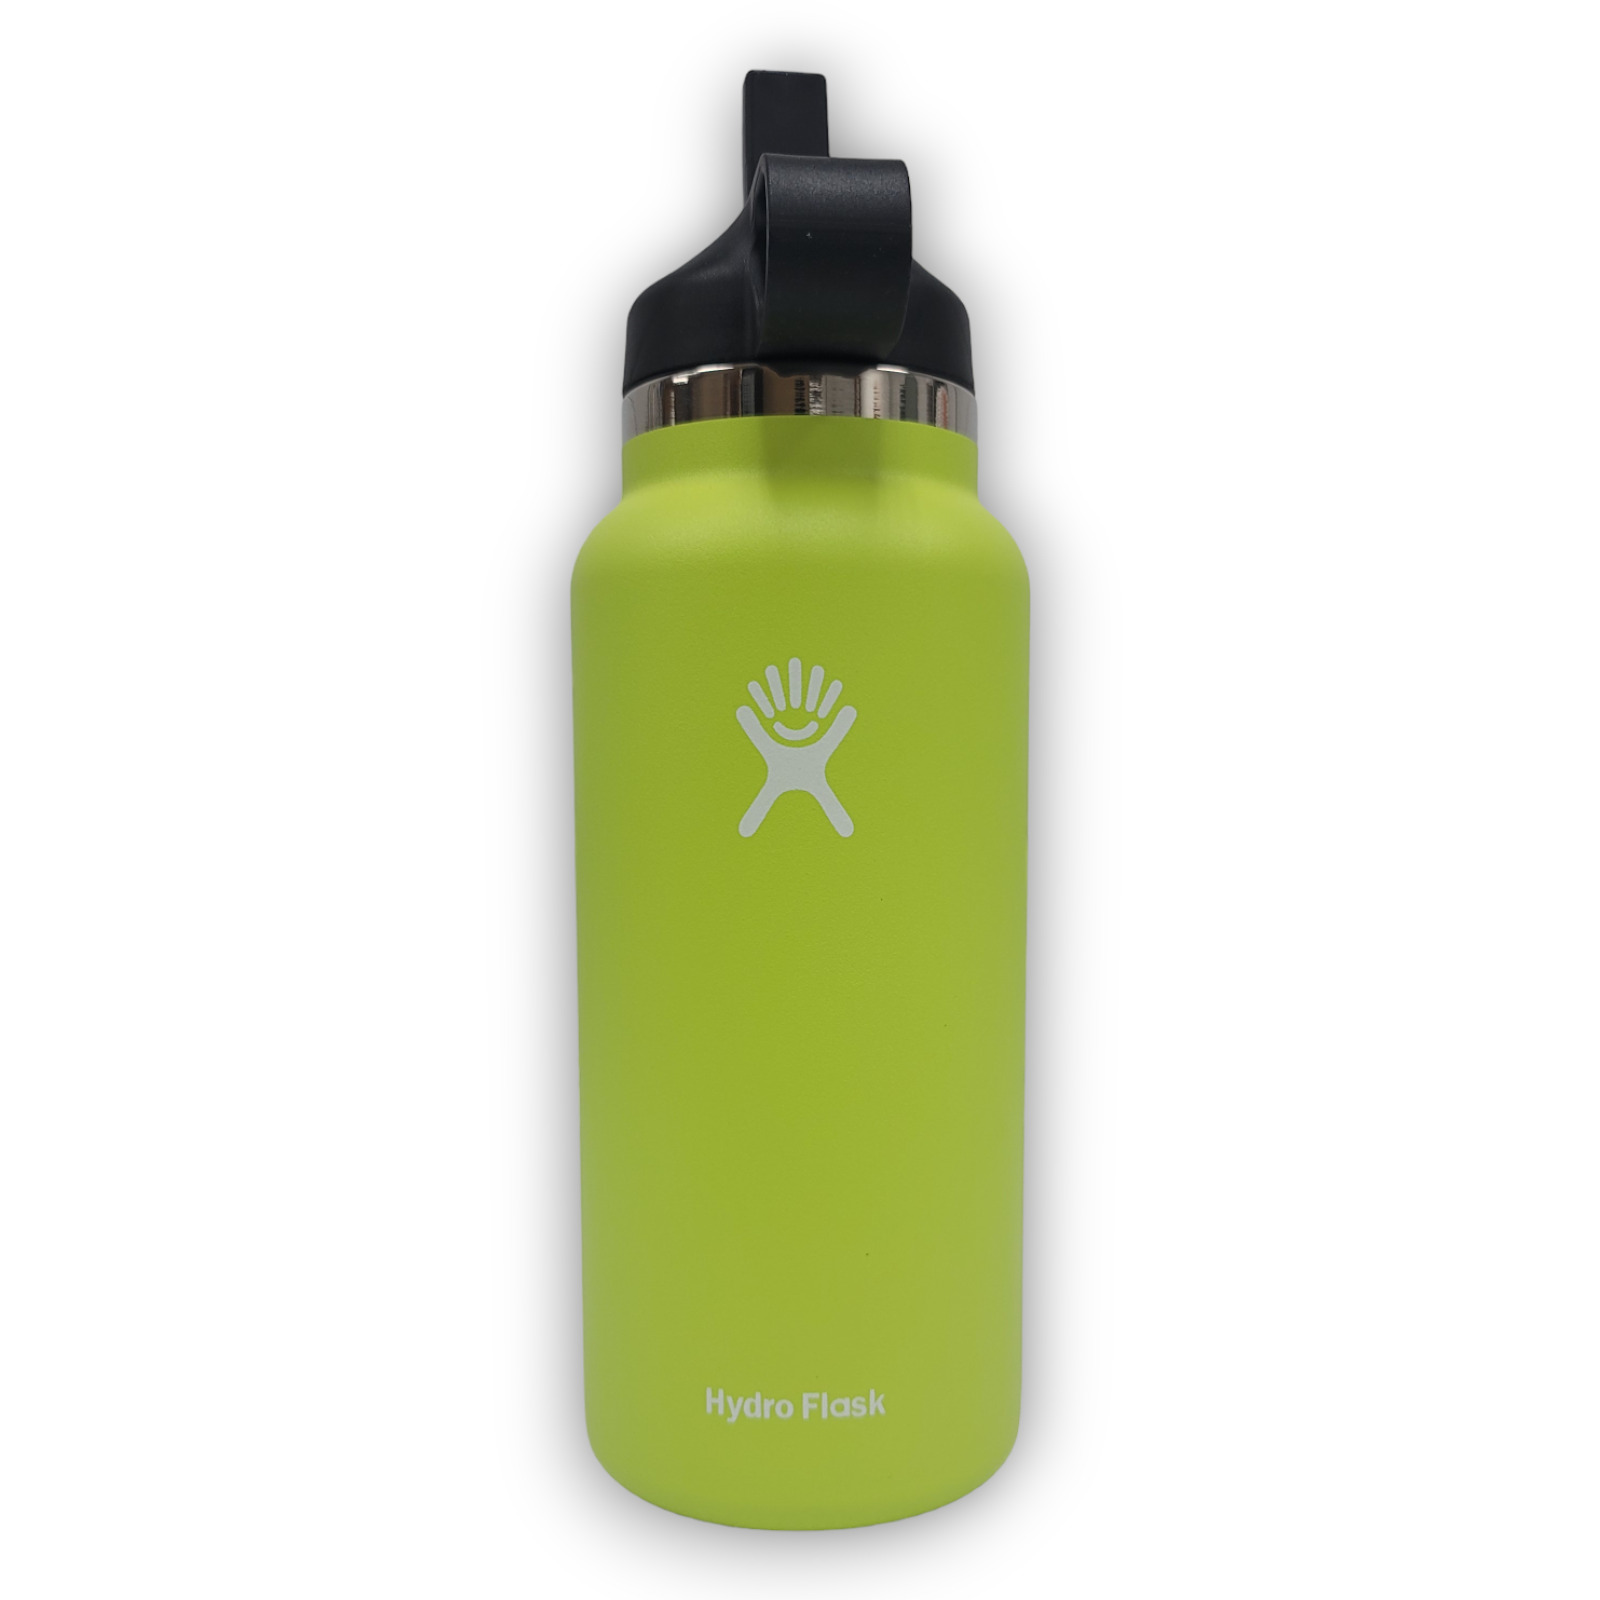 Hydro Flask Water Bottle - Stainless Steel - 32oz